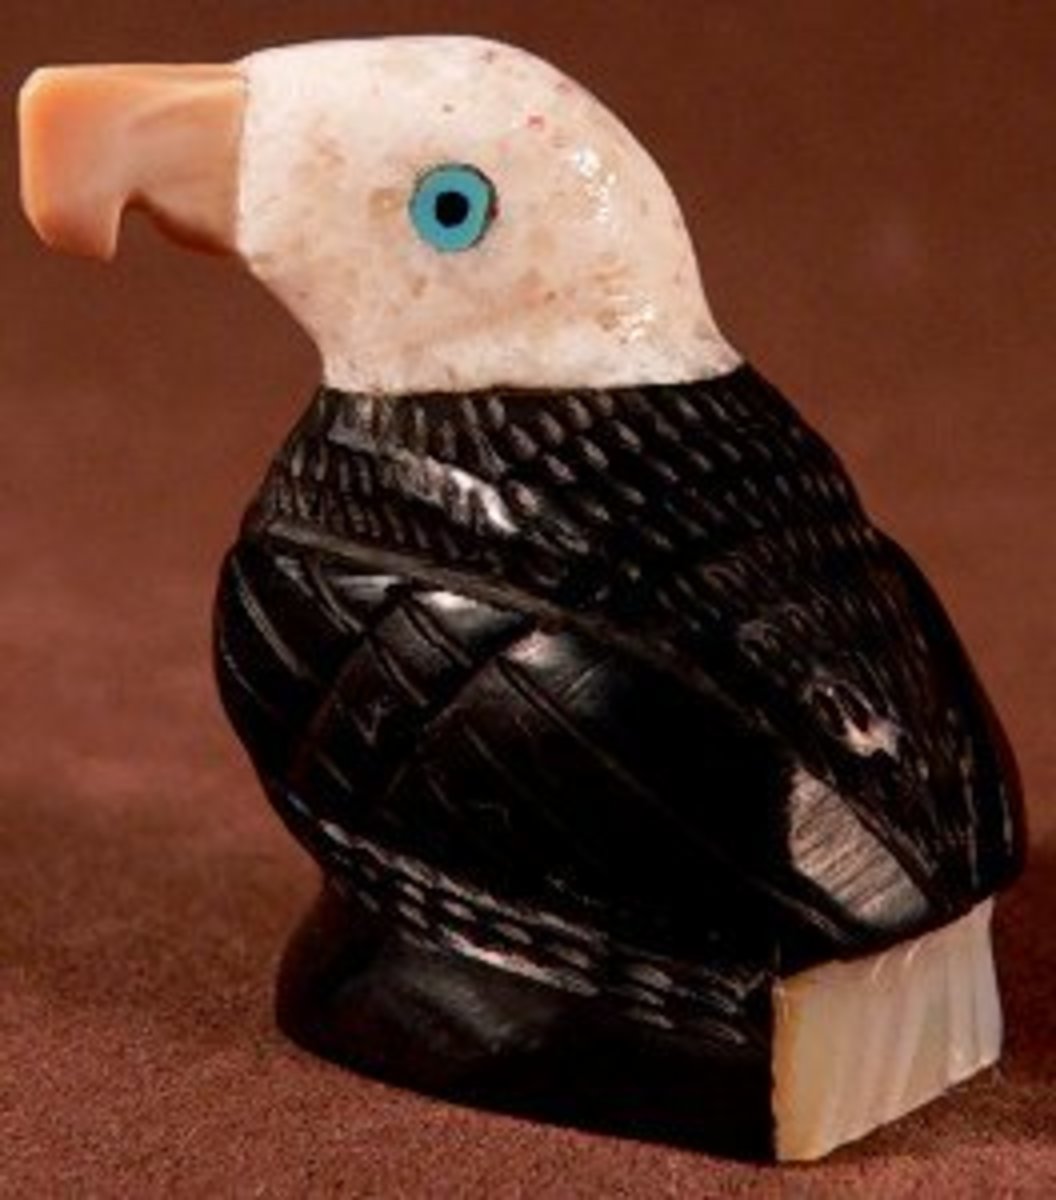 Edison Bobelu bald eagle made of various materials.